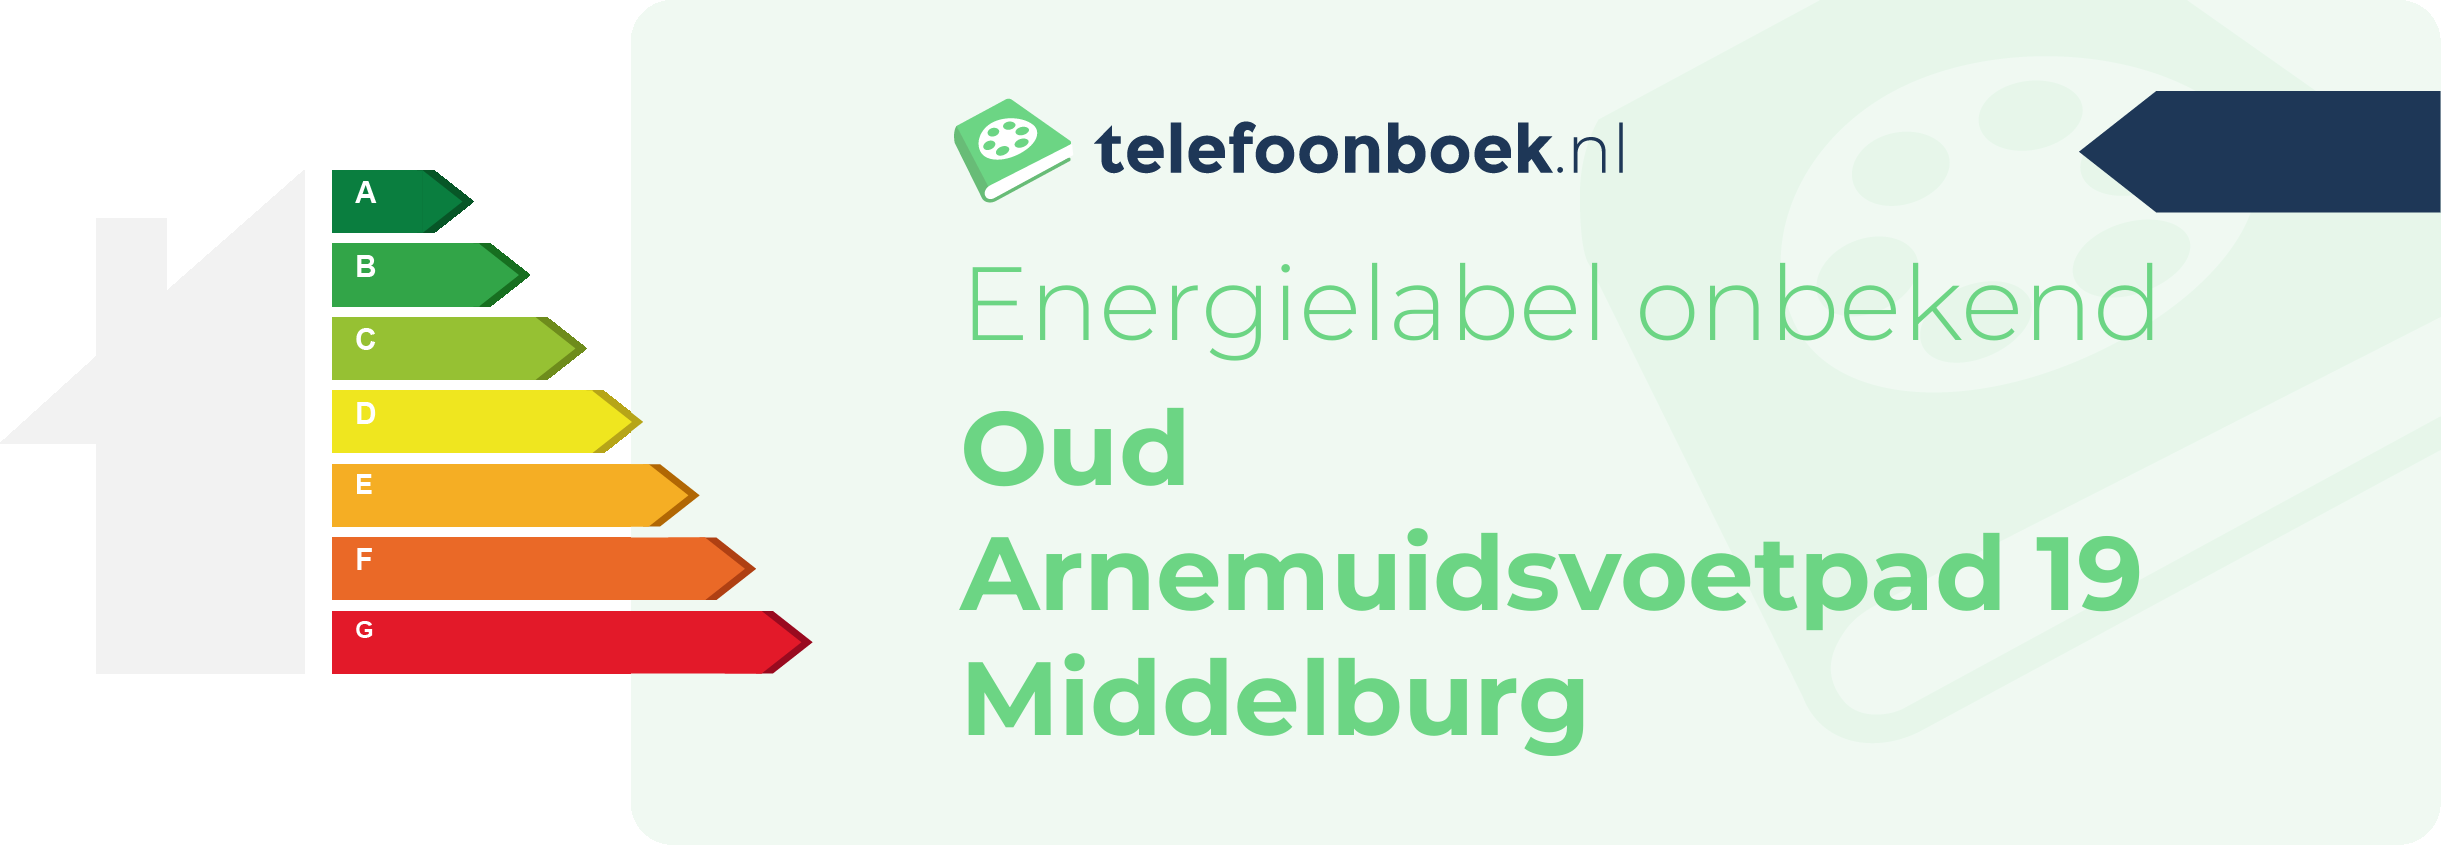 Energielabel Oud Arnemuidsvoetpad 19 Middelburg